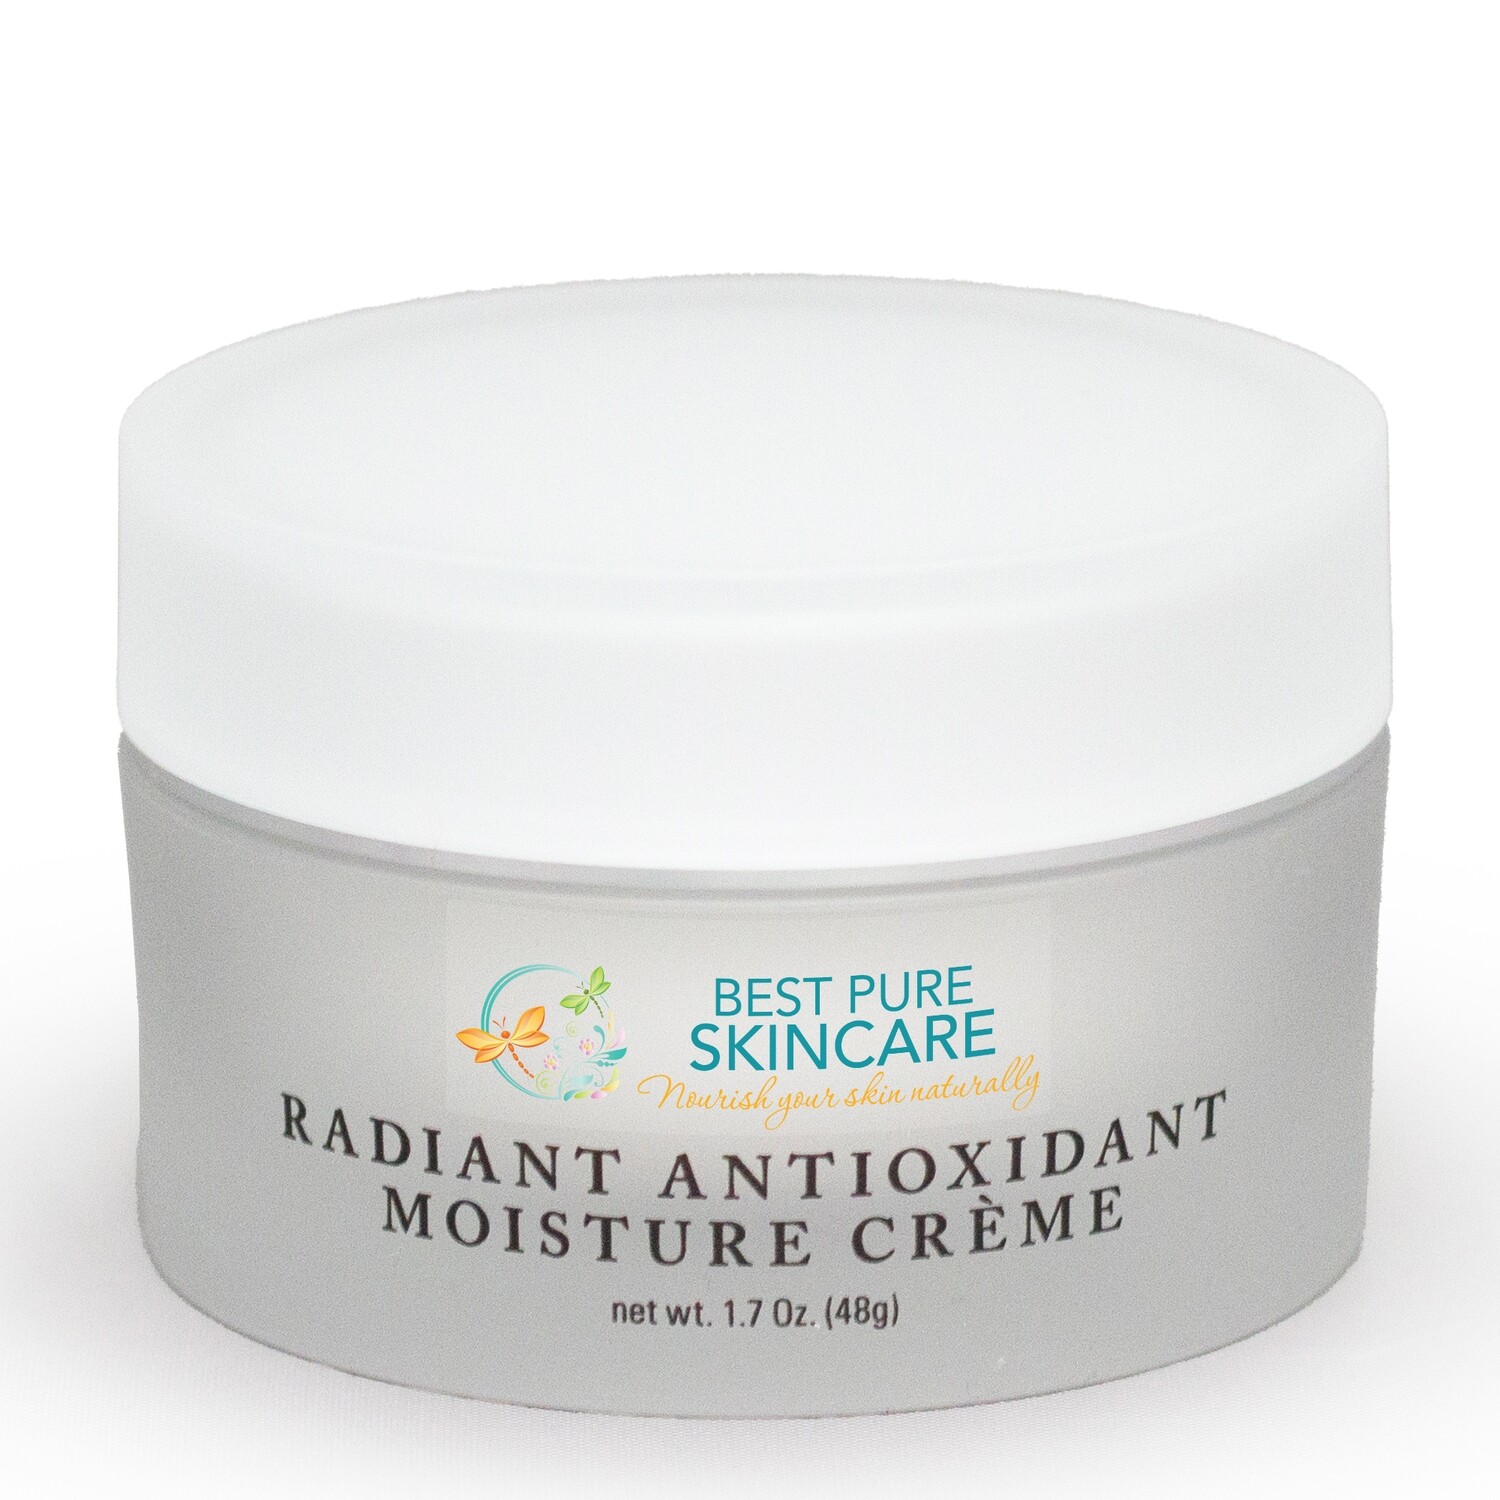 Radiant Antioxidant Moisture Crème